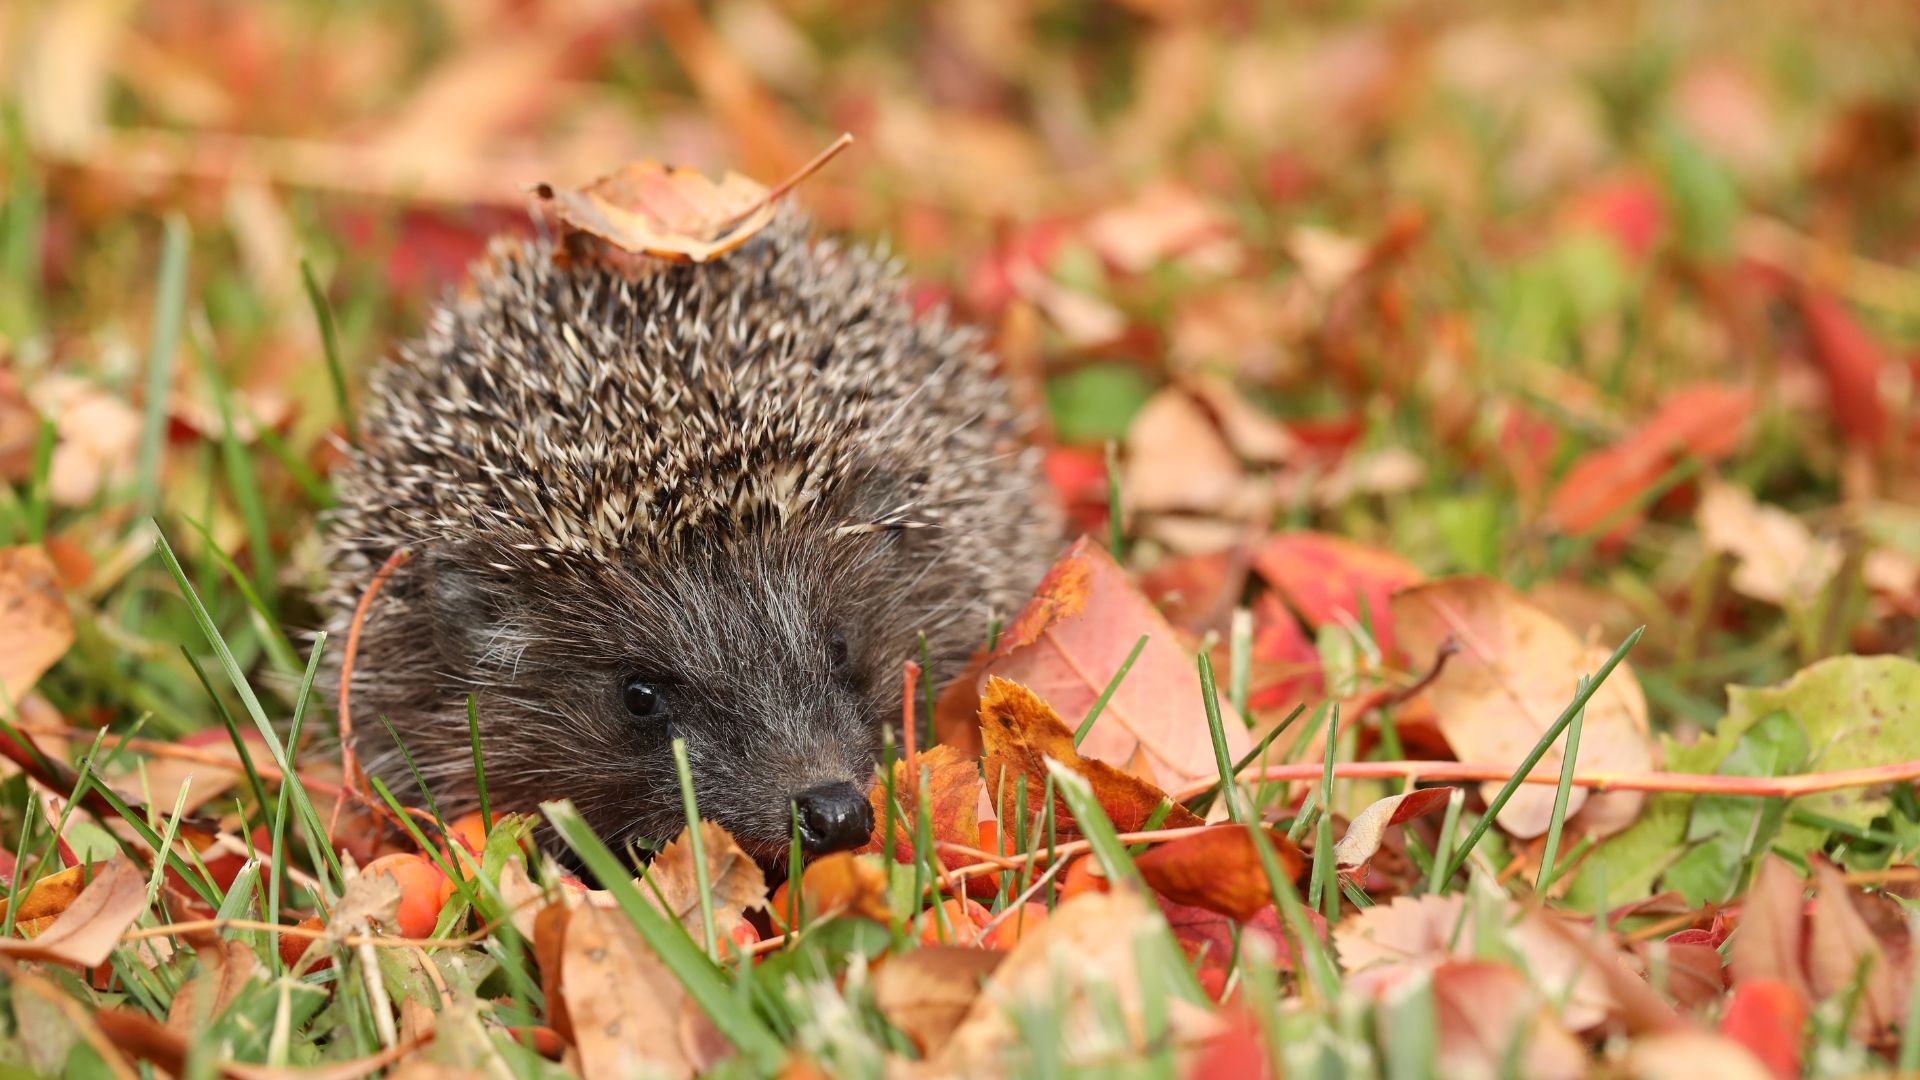 A hedgehog in some brown leaves